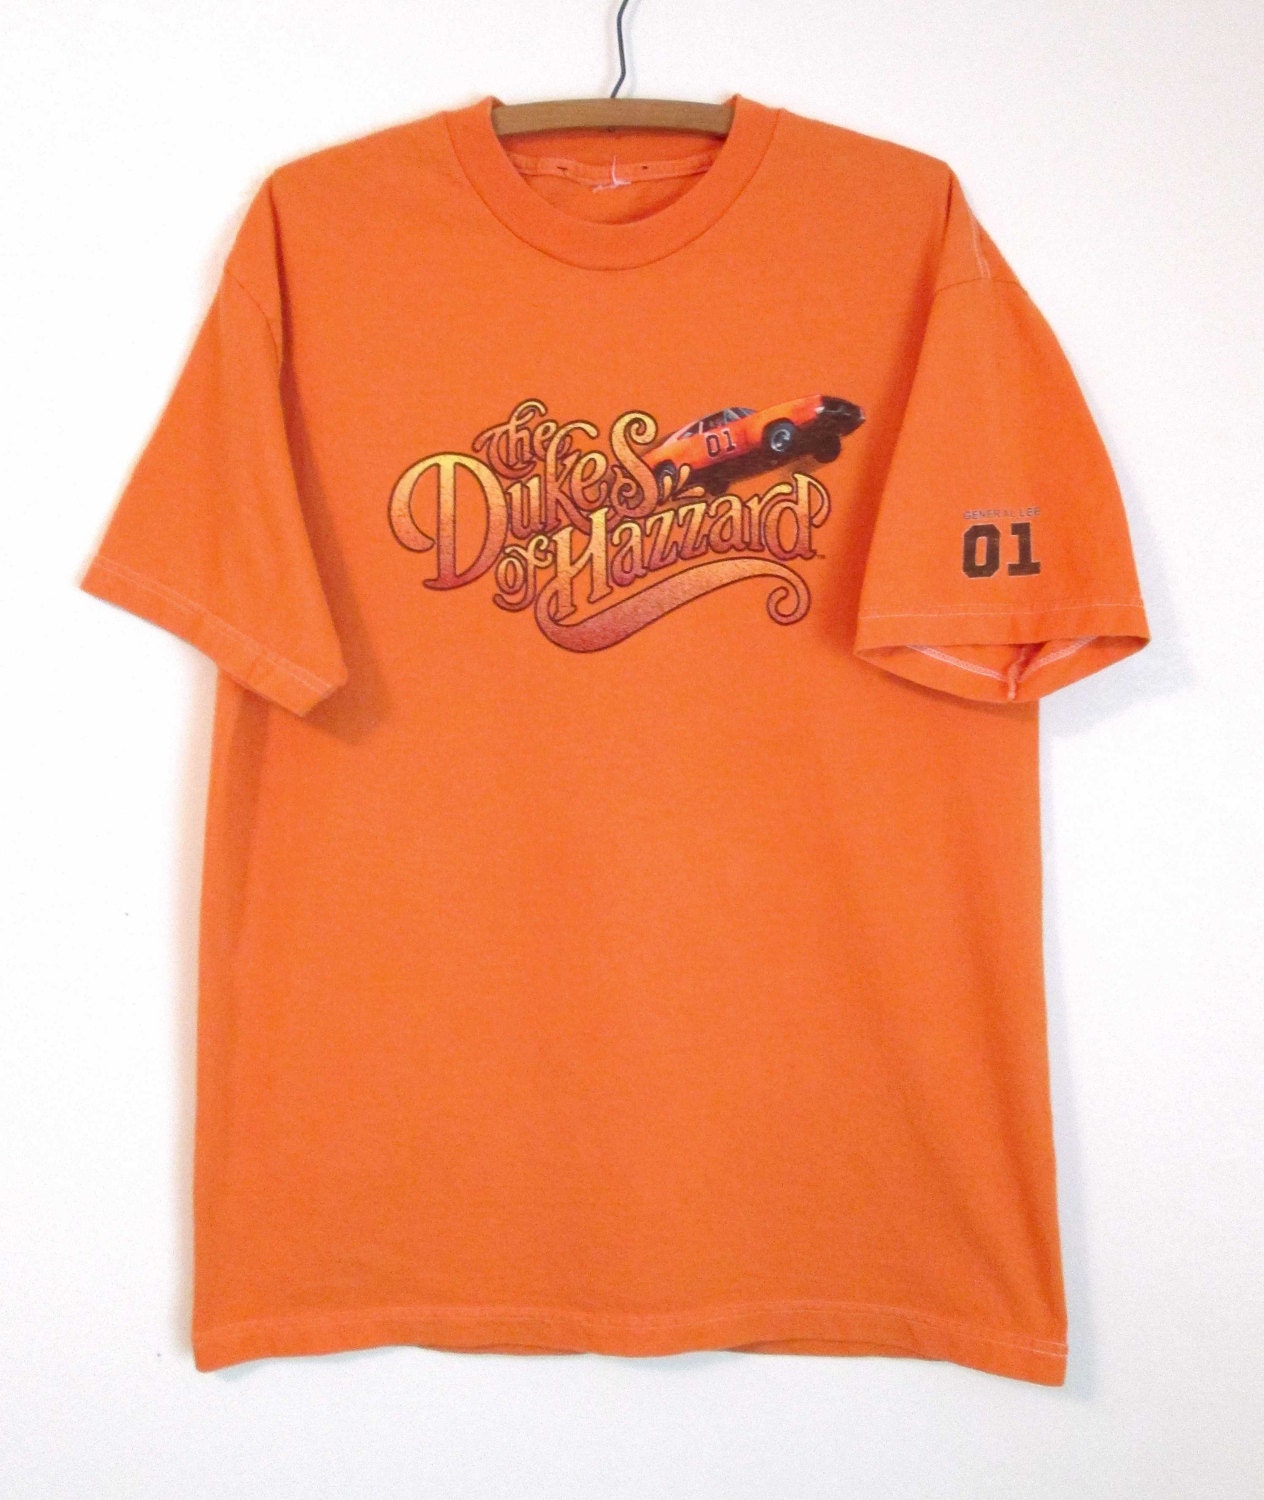 Dukes of Hazzard General Lee Vintage Orange Mens T-Shirt